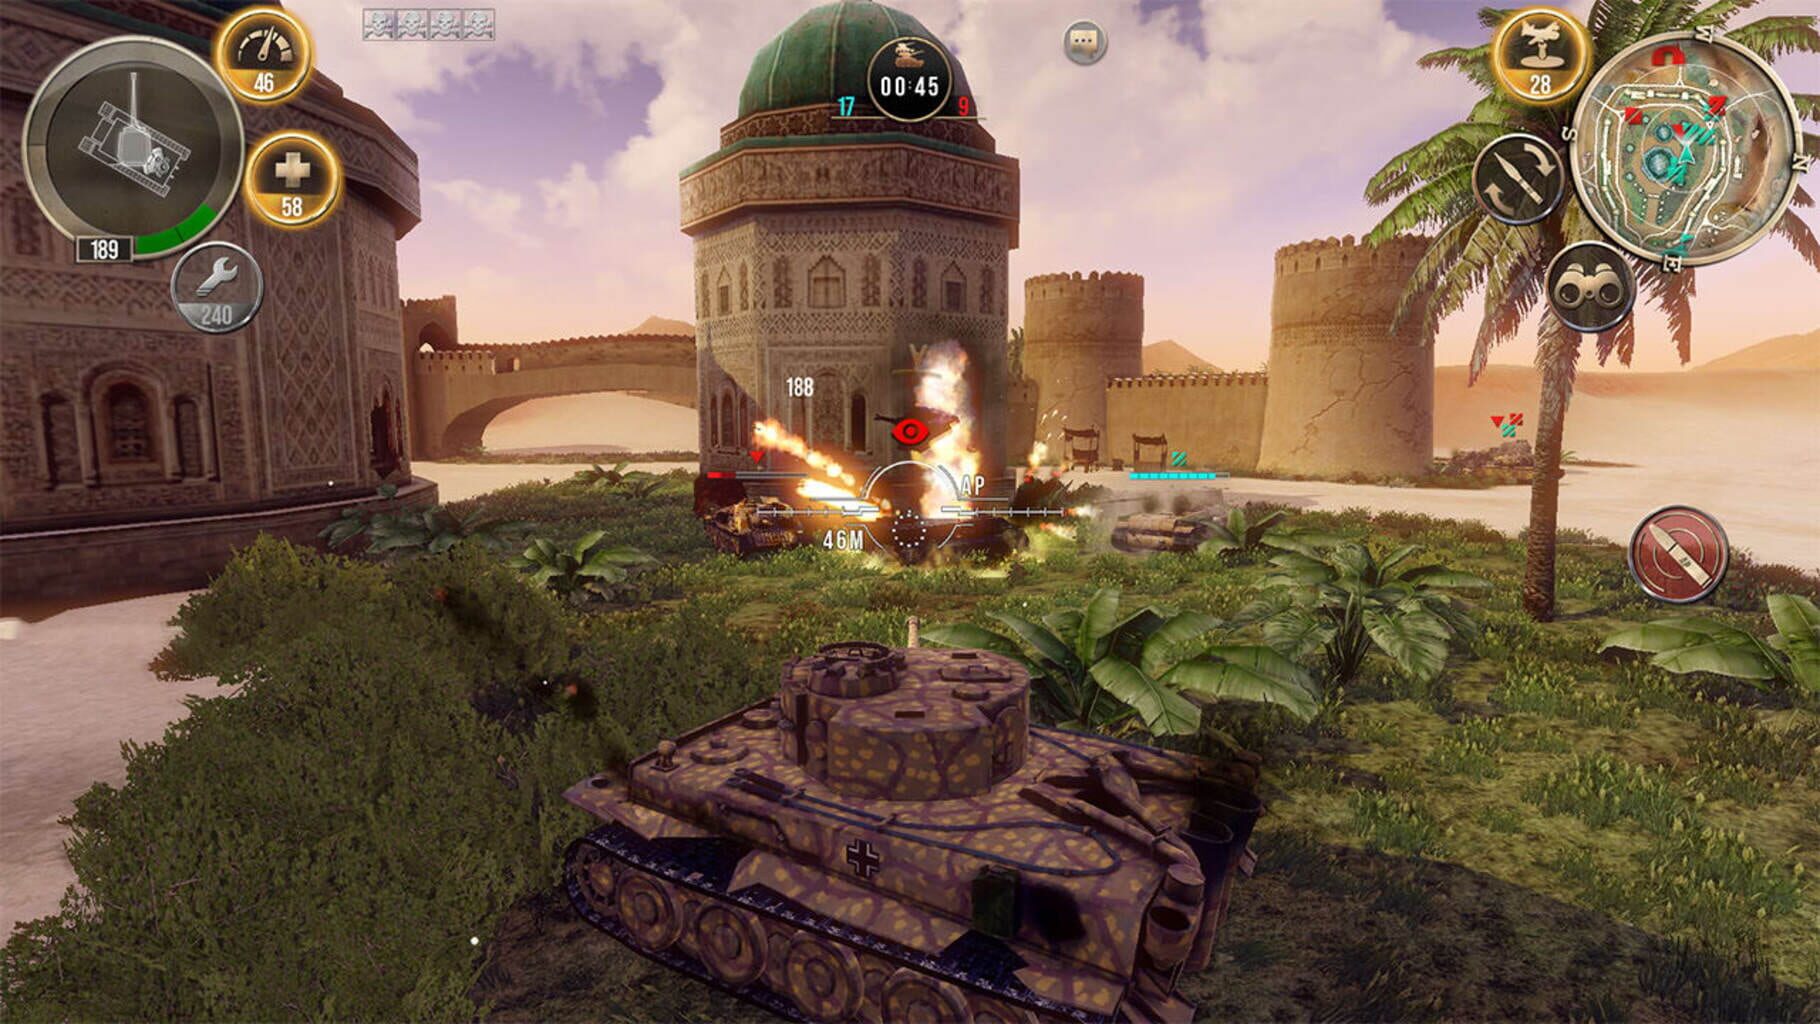 Infinite Tanks WWII screenshot